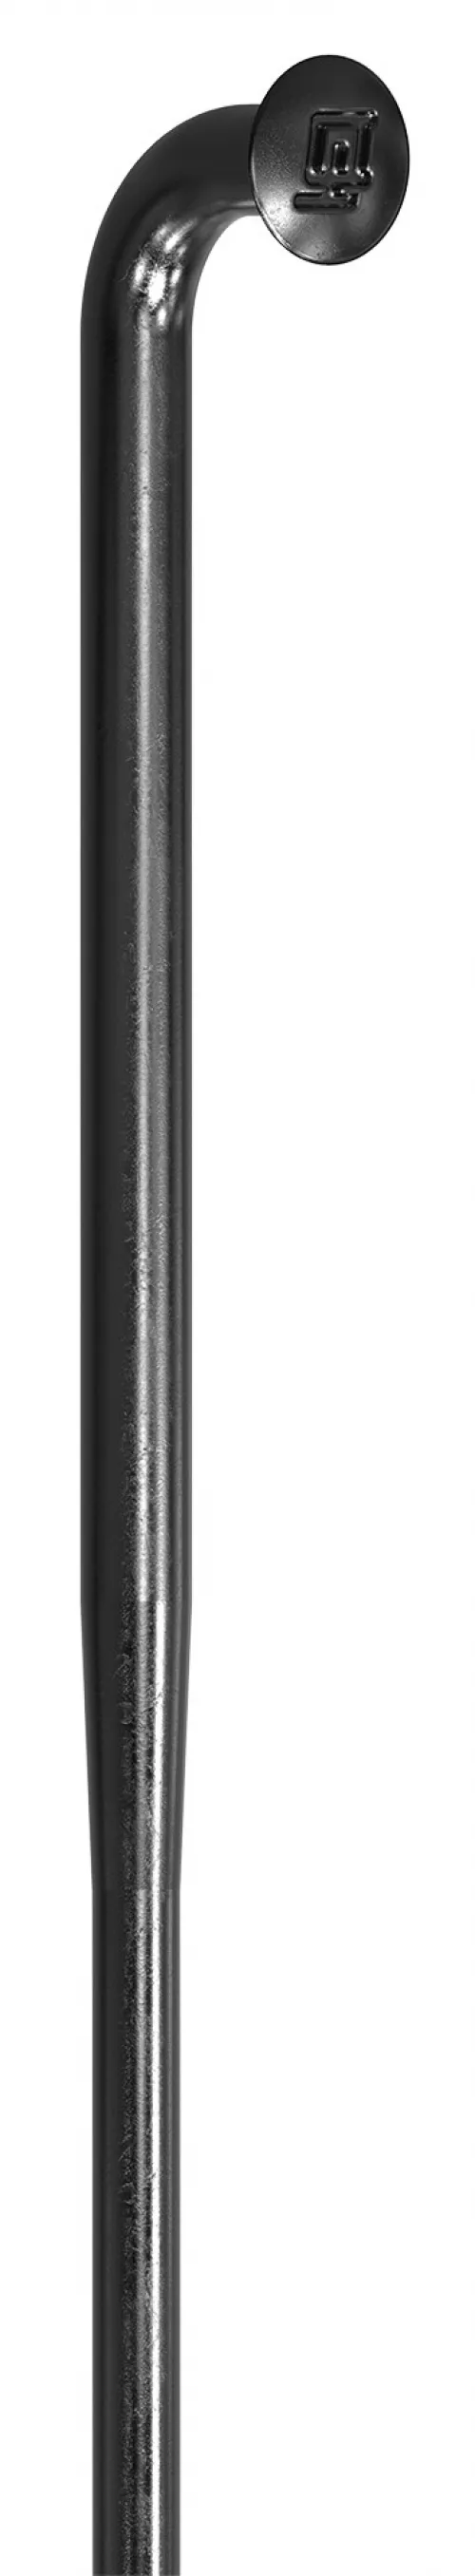 Спицы DT Swiss Alpine III Standard (J-bend) 2.0/1.8/2.34mm x 261mm black 100шт